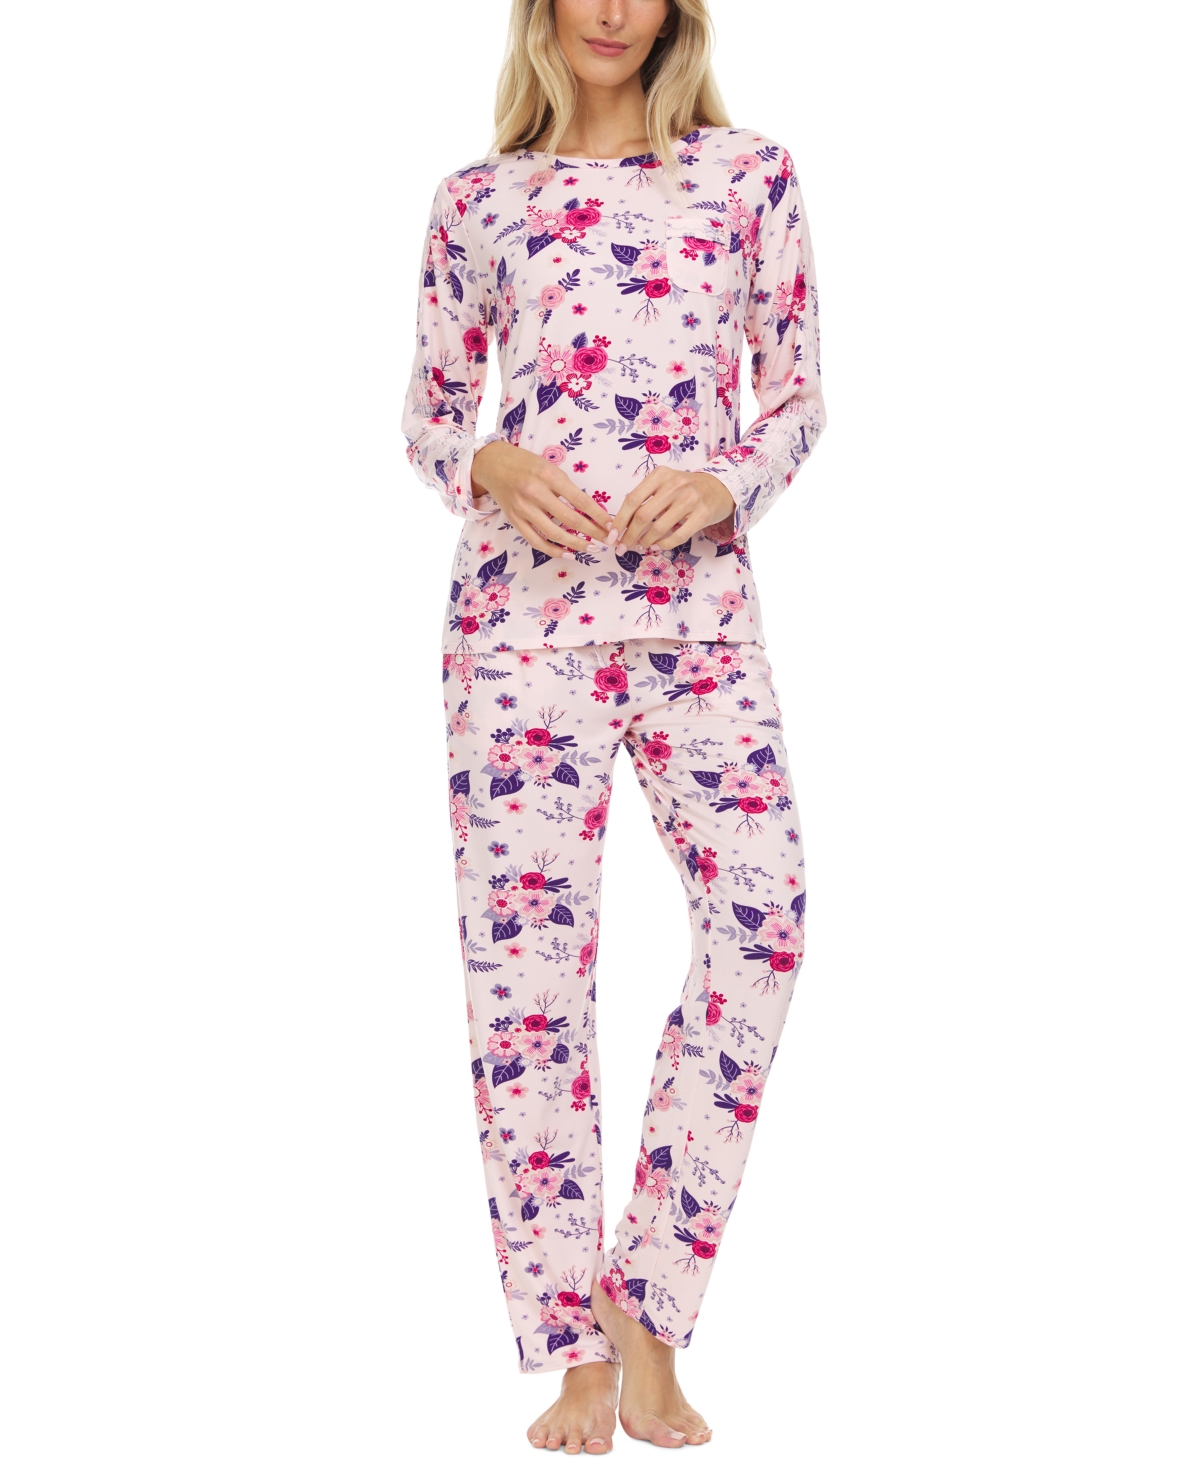 Erica Lace-Trim Printed Knit Pajama Set - Pink